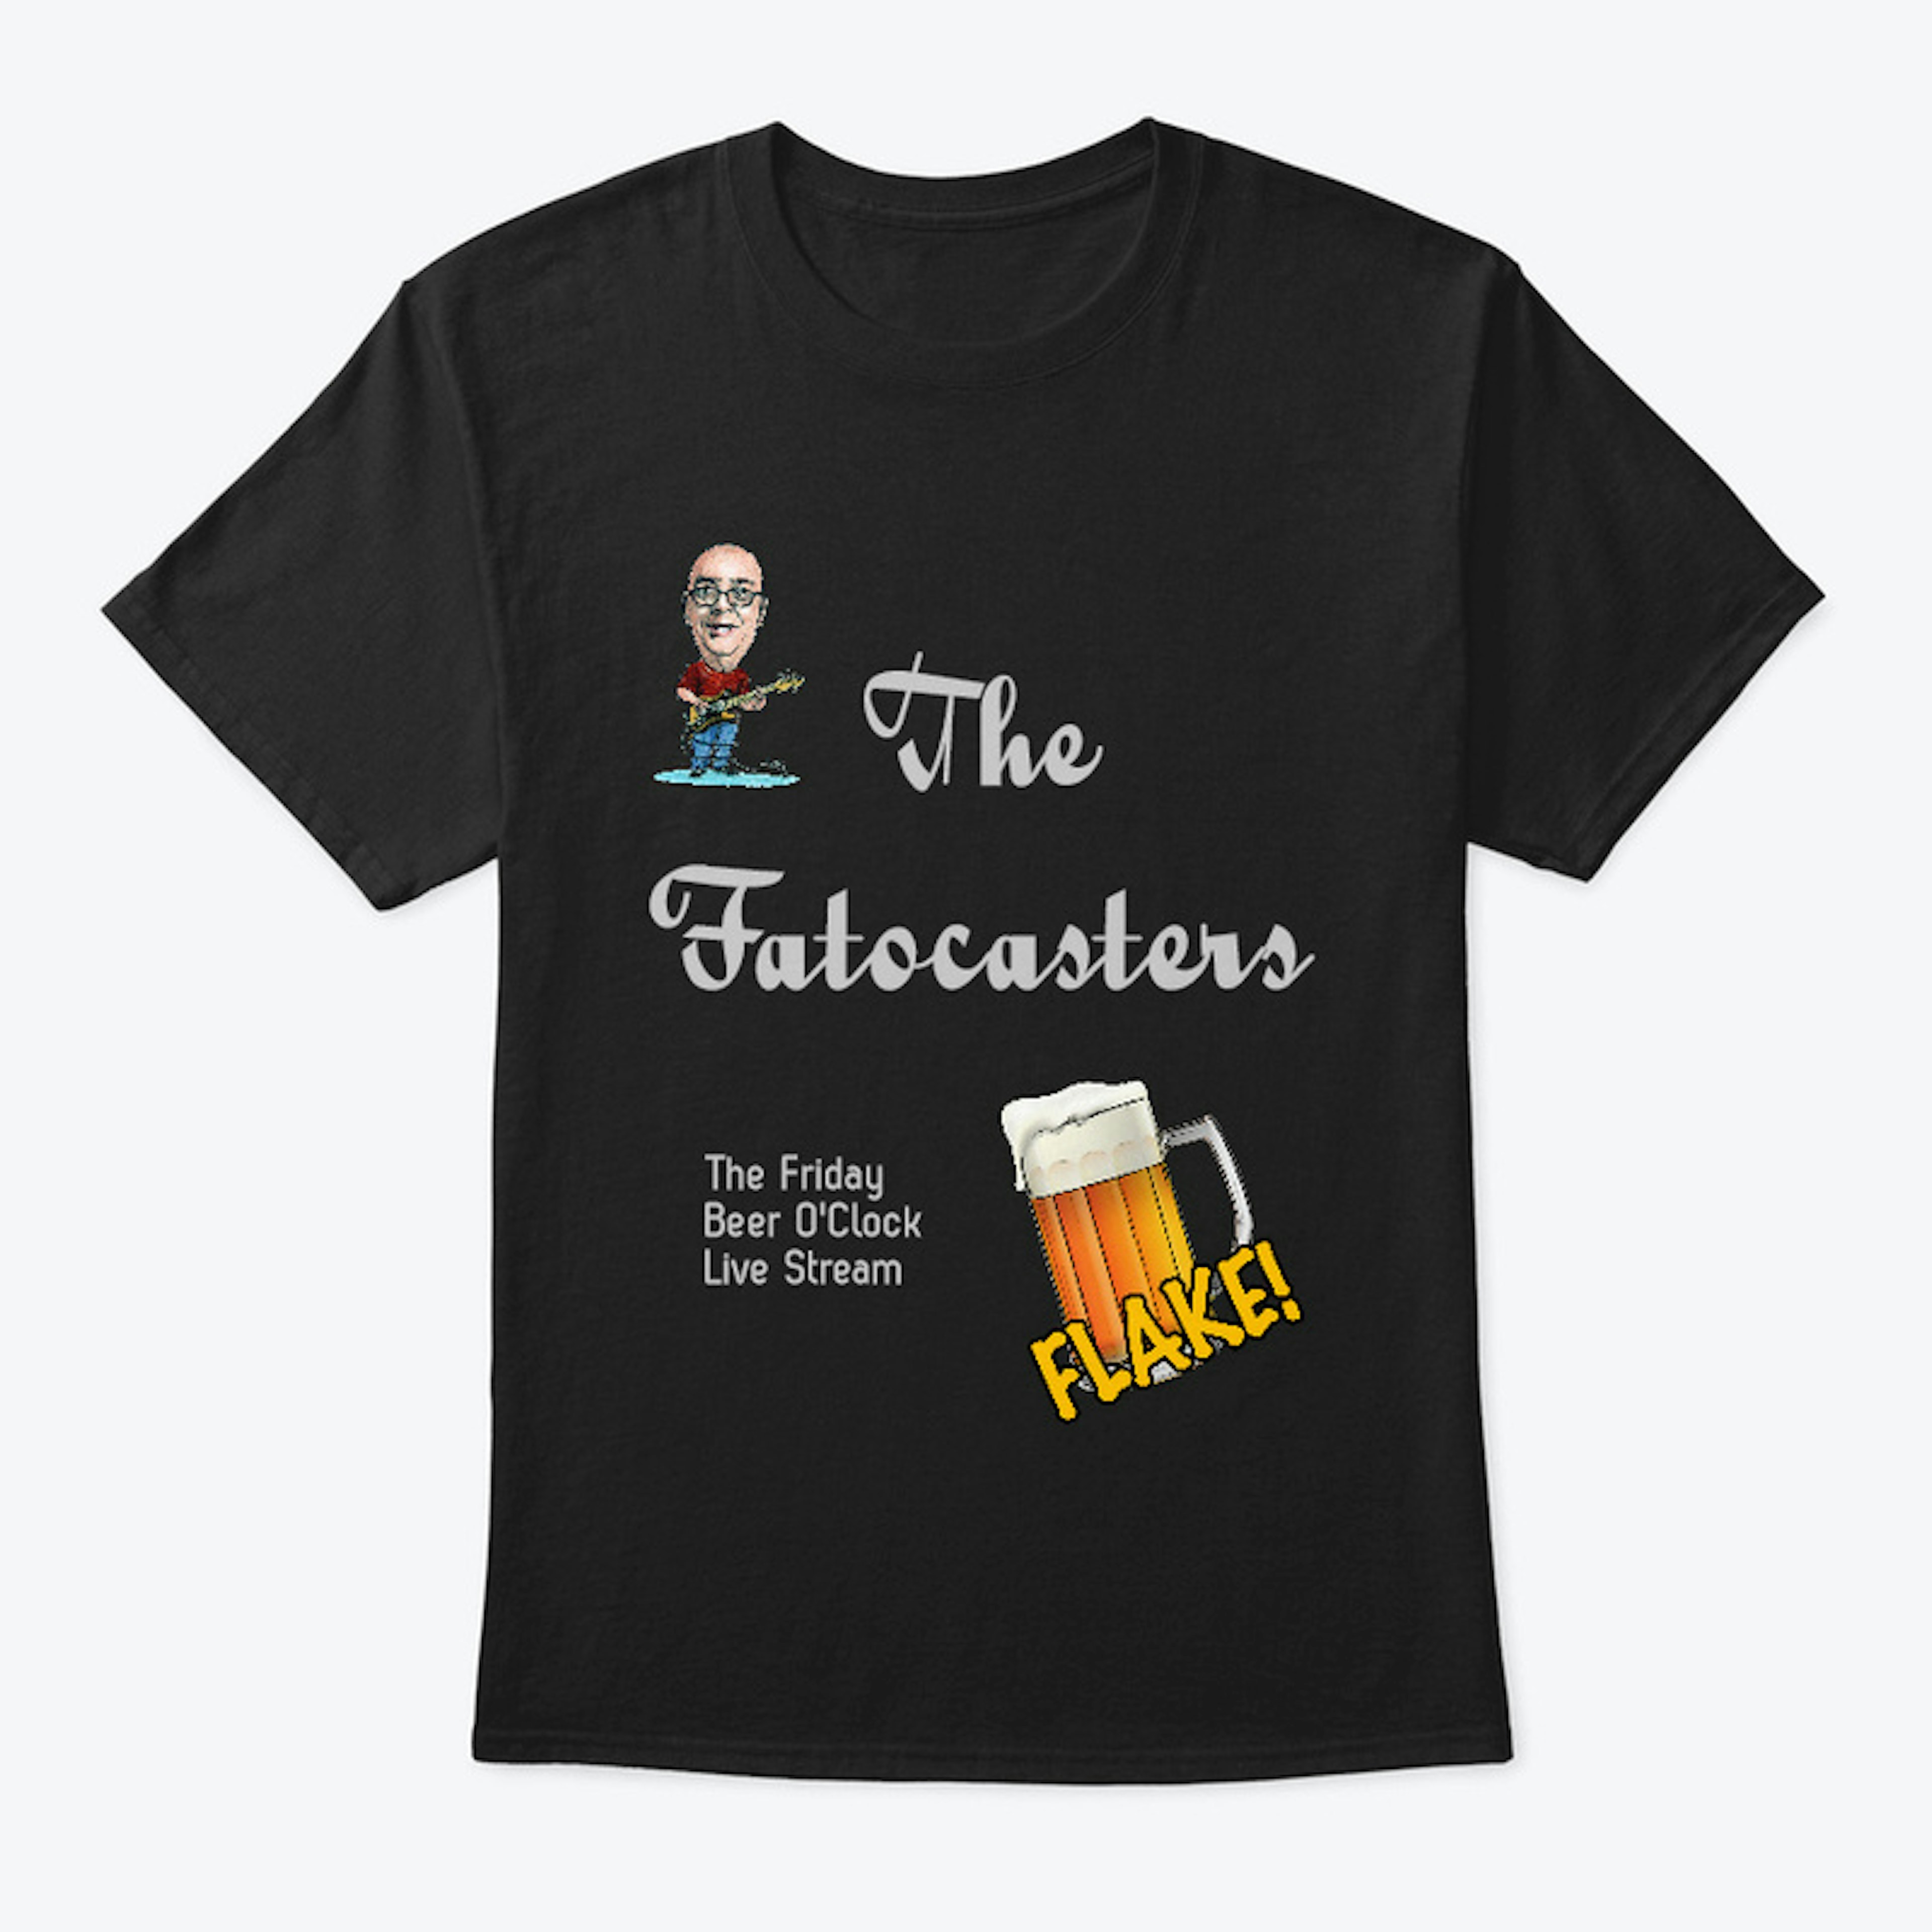 The Fatocasters